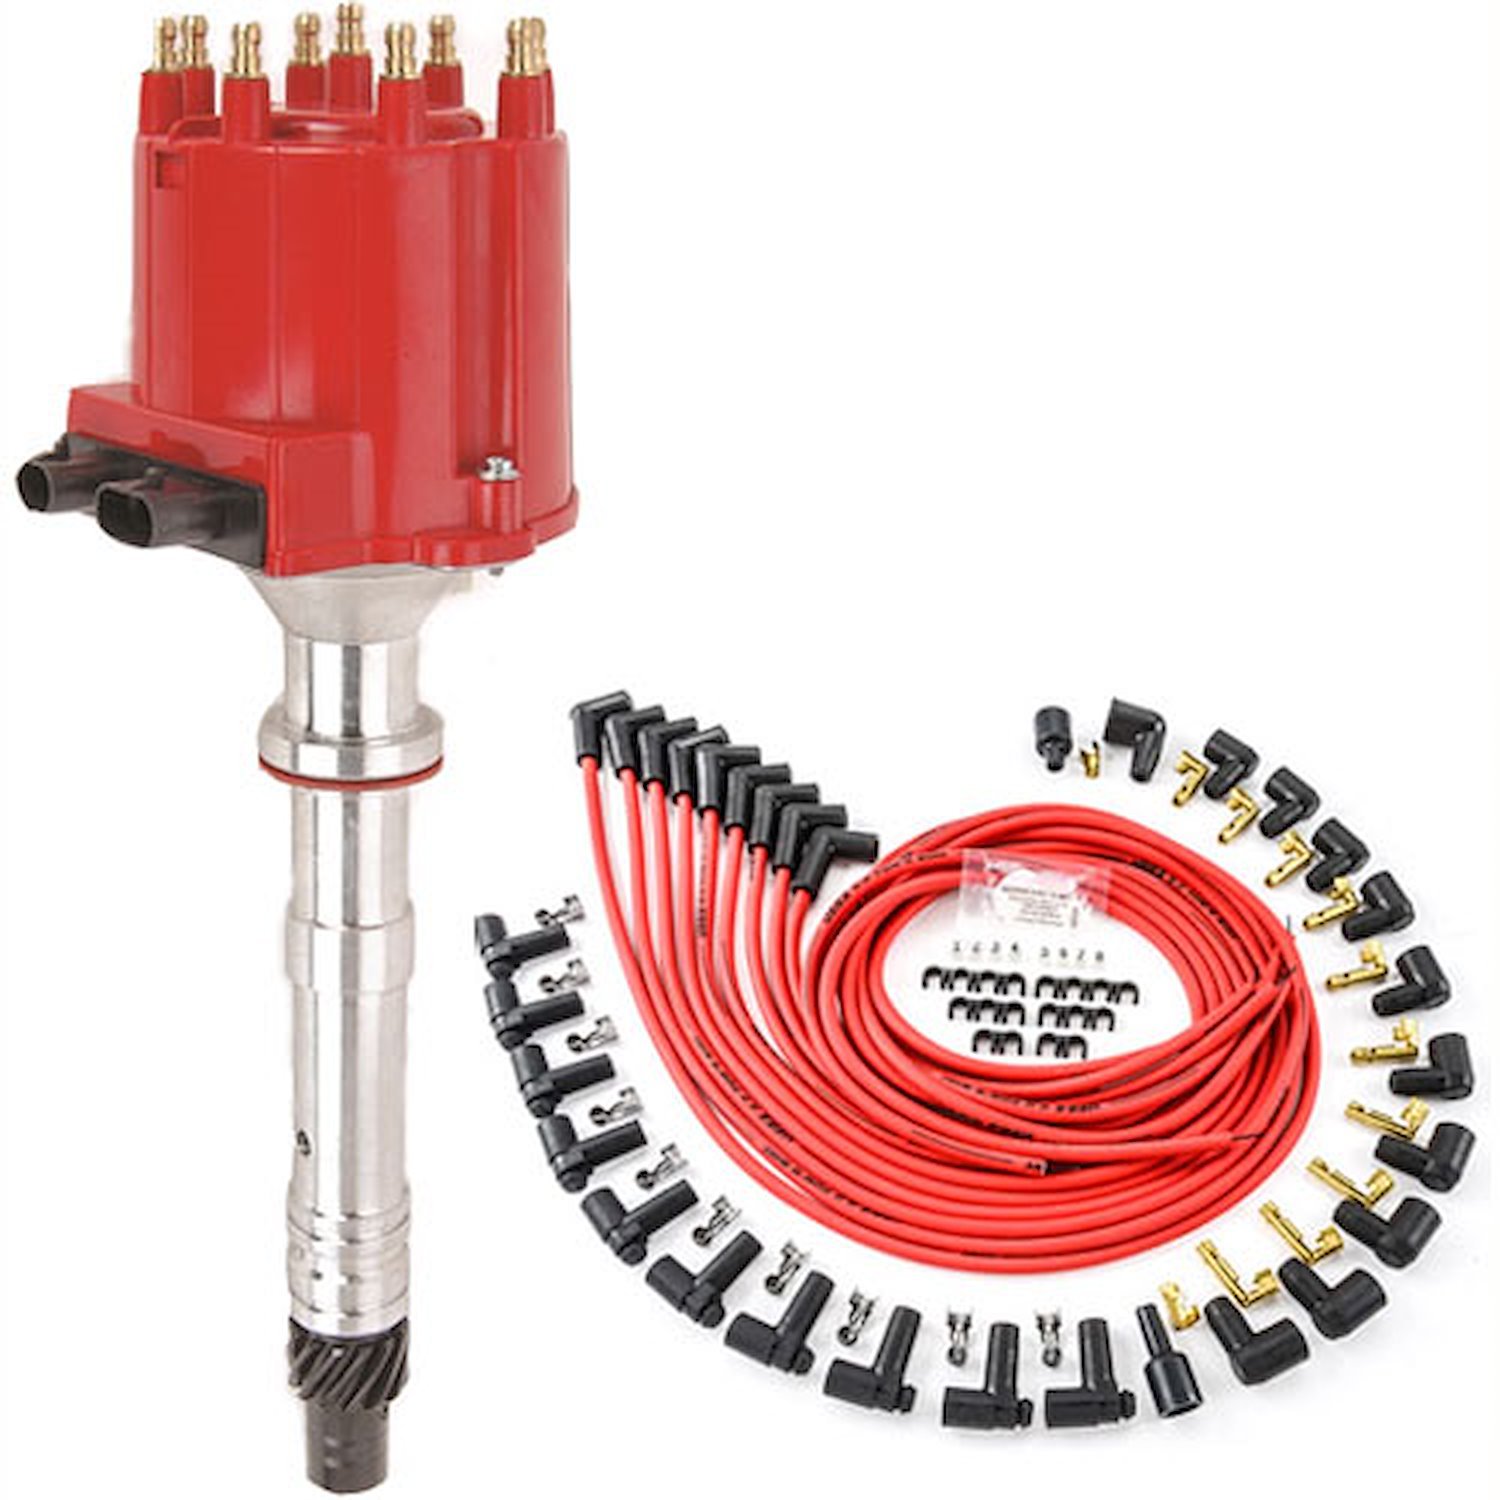 Distributor and Spark Plug Wire Set